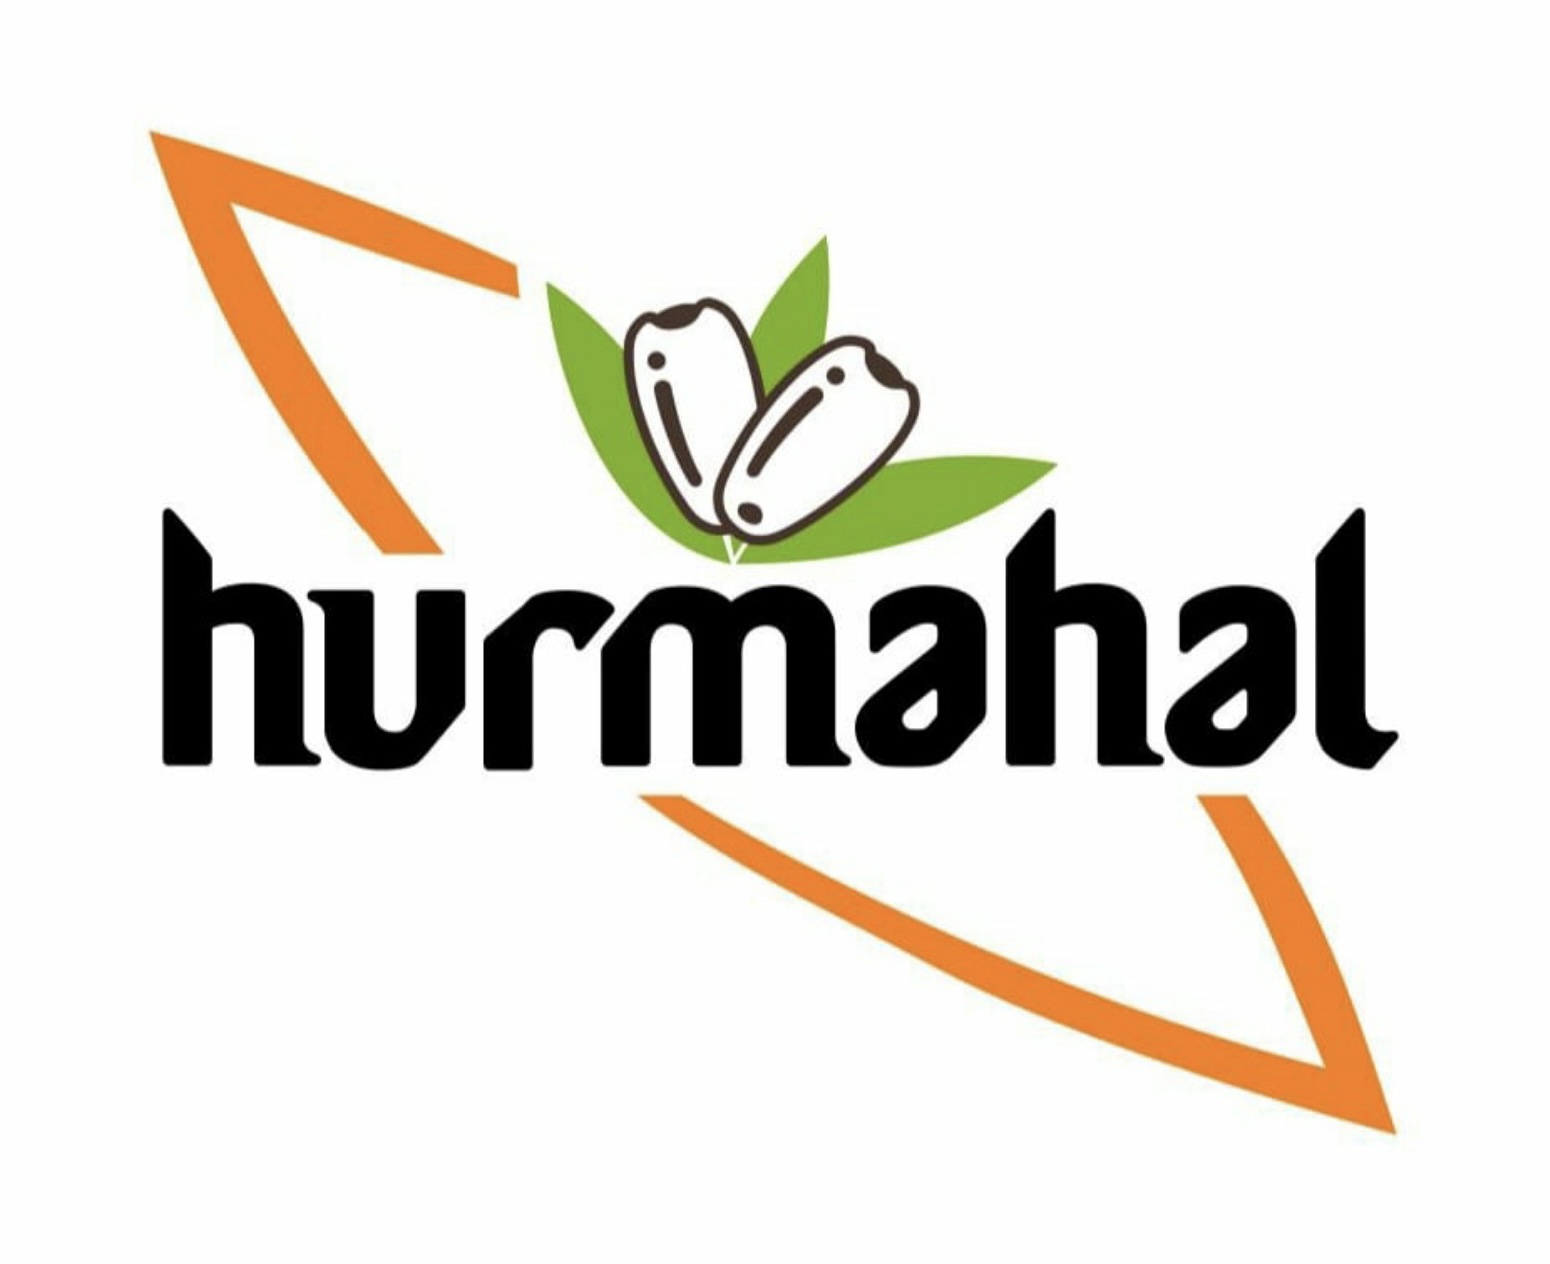 HURMAHAL